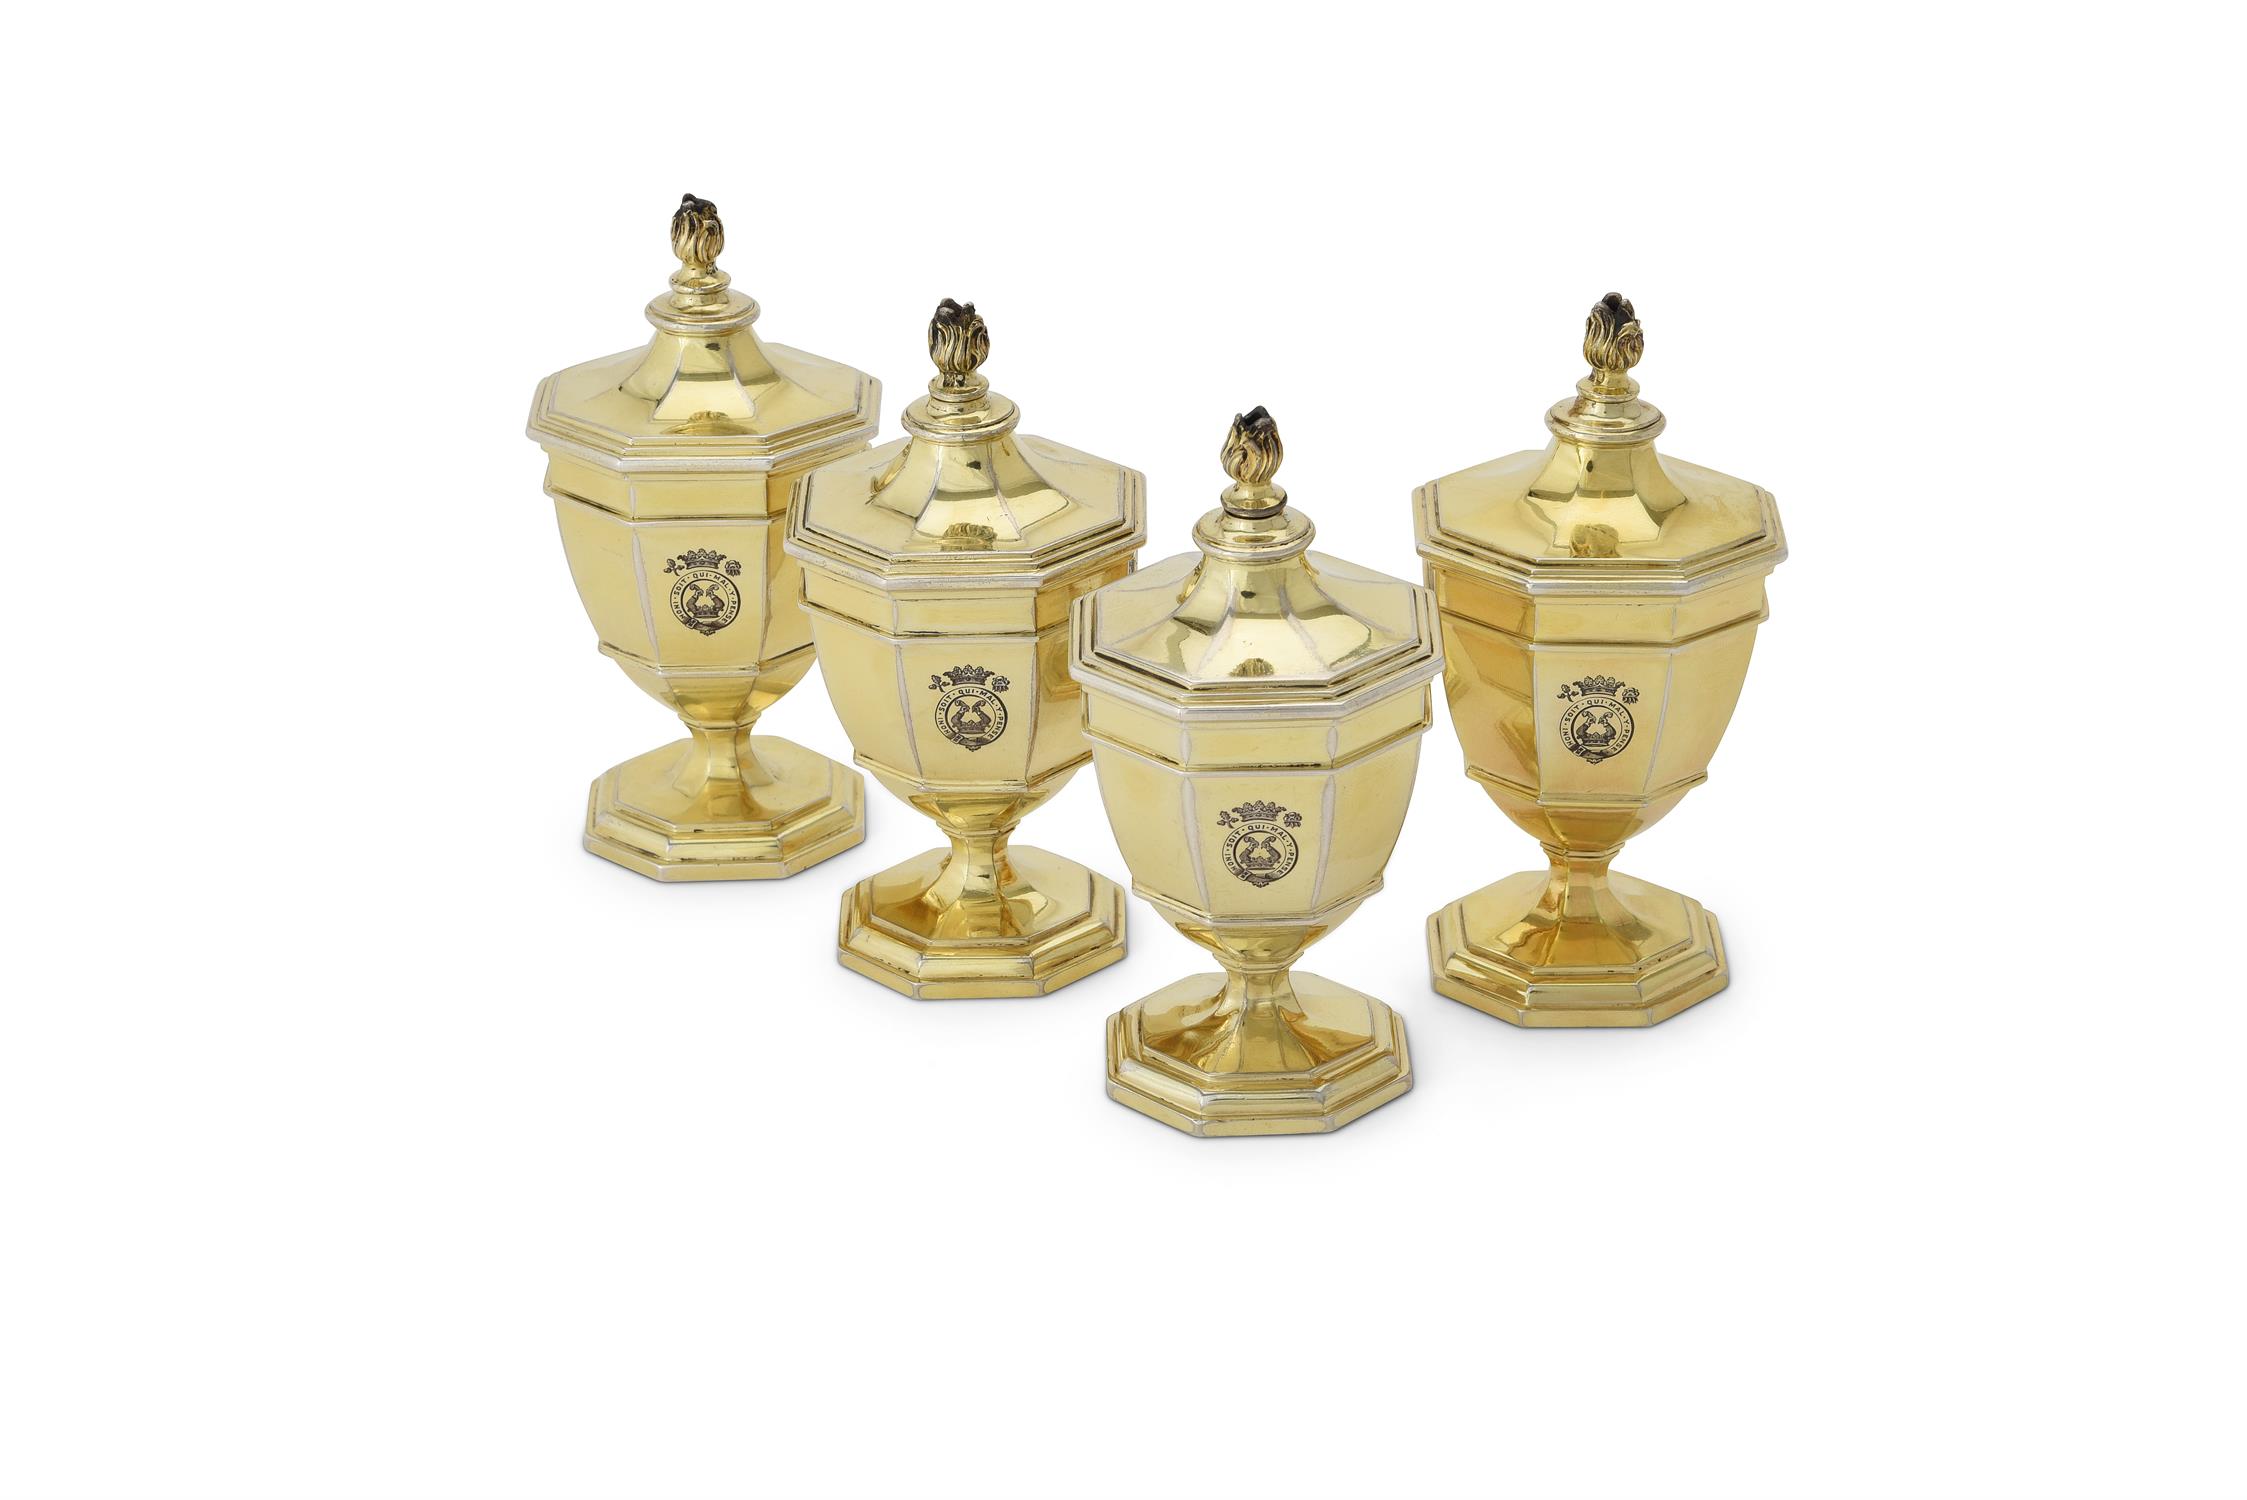 A set of four silver gilt octagonal vase shape salt cellars by Carrington & Co.